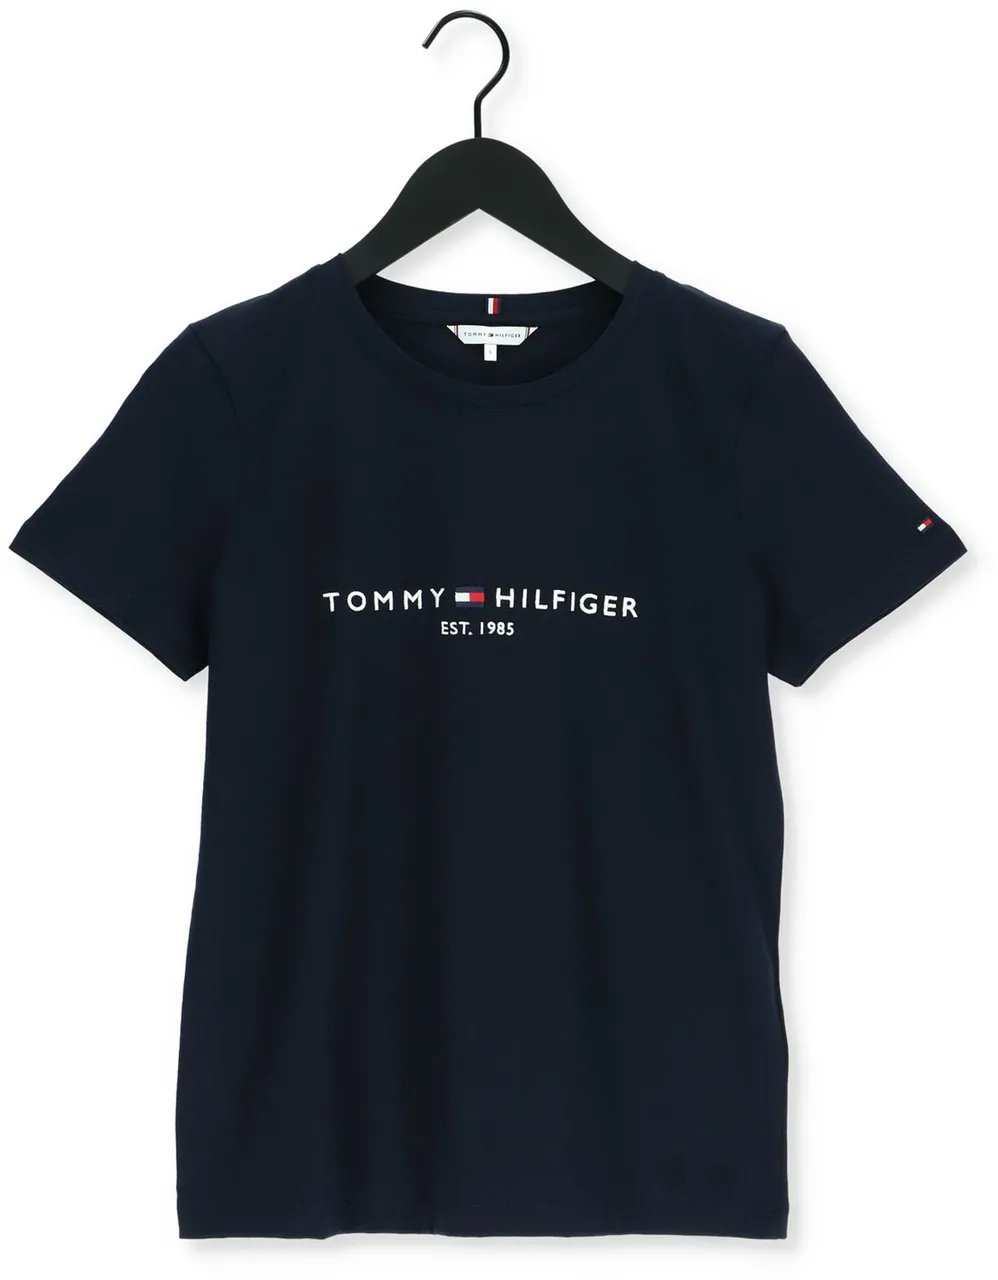 TOMMY HILFIGER Dames Tops & T-shirts Heritage Hilfiger C-nk Reg Tee - Donkerblauw